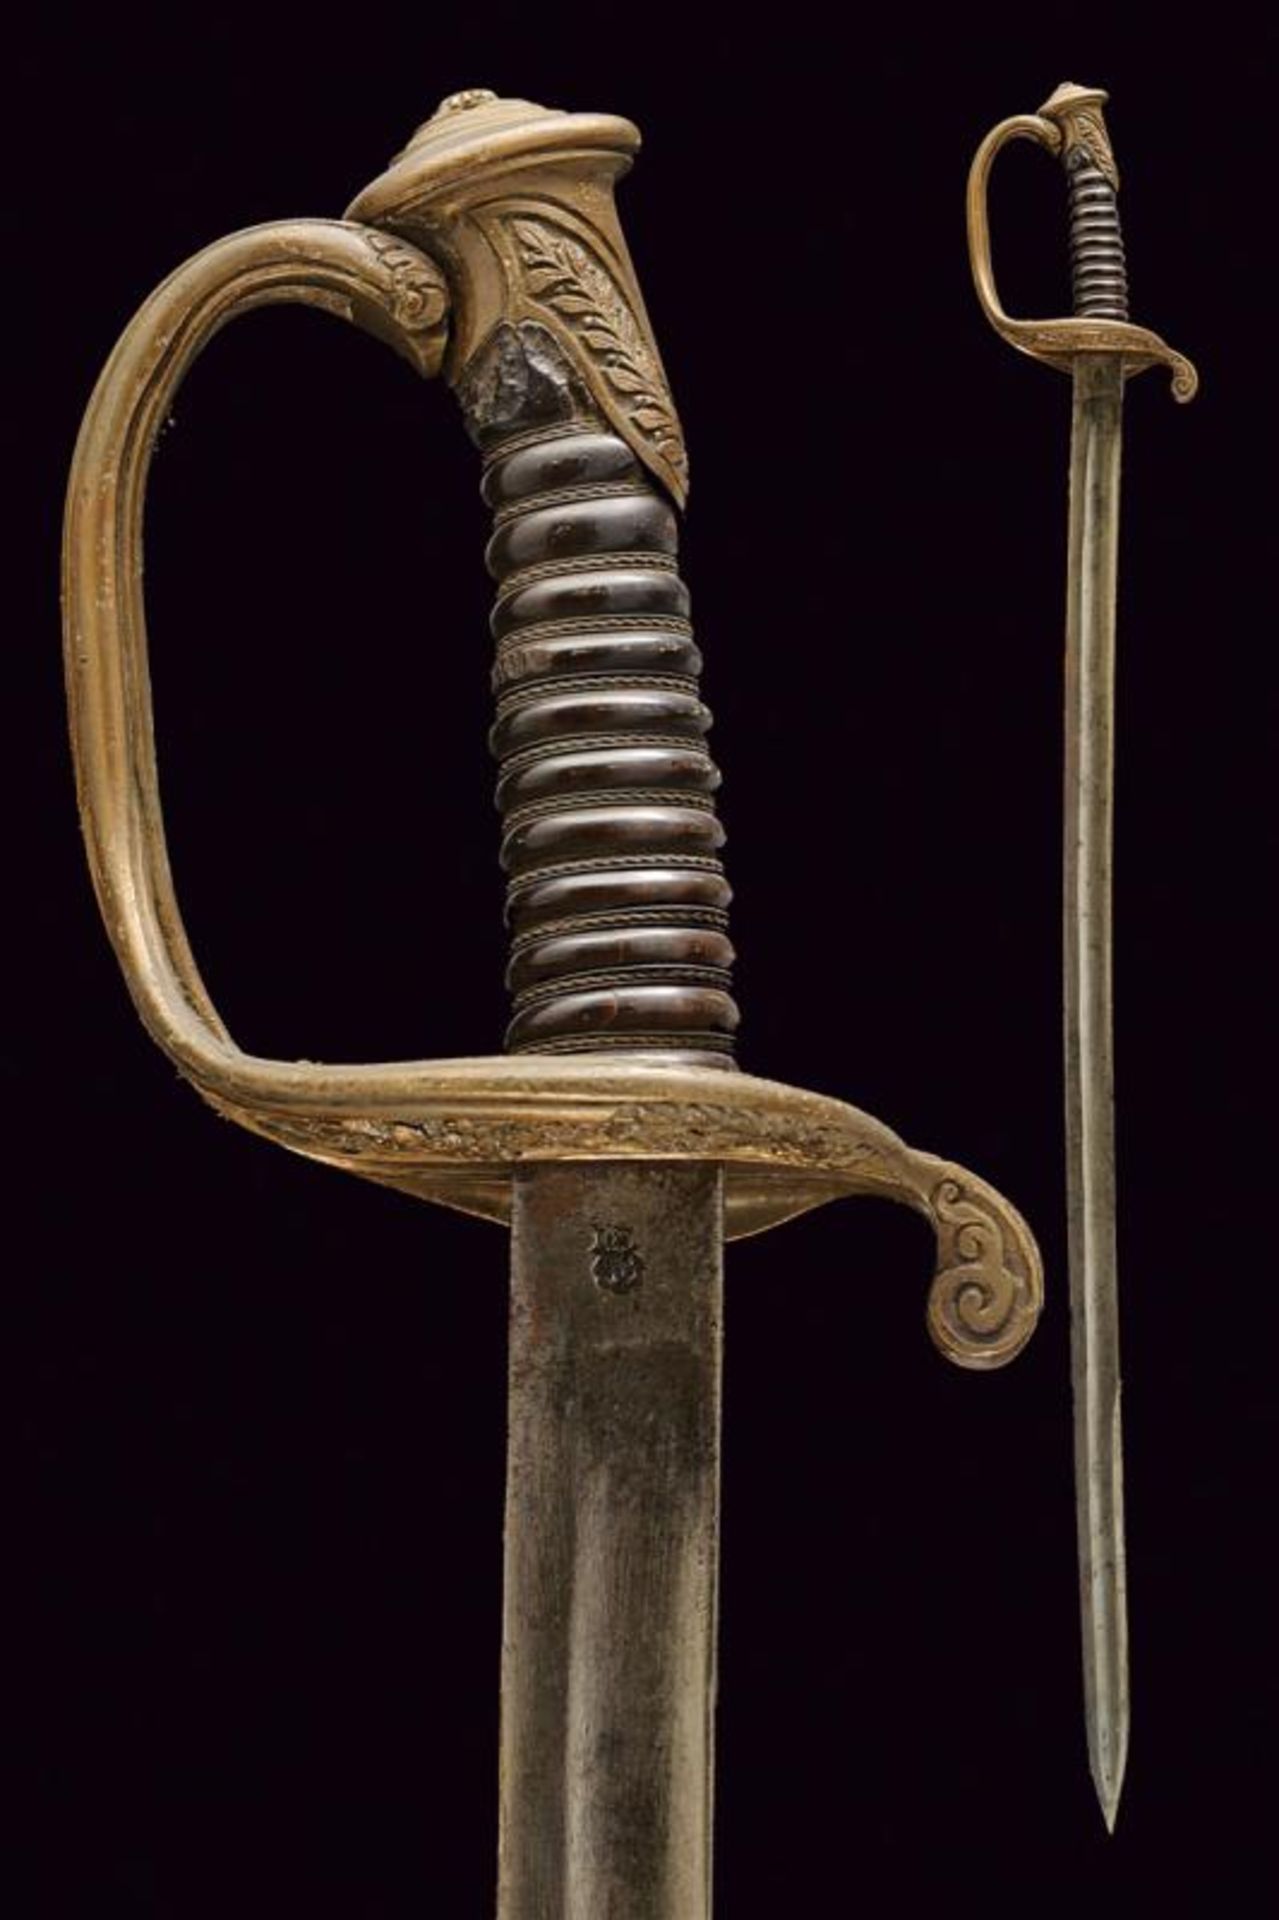 An 1845 model officer's sabre